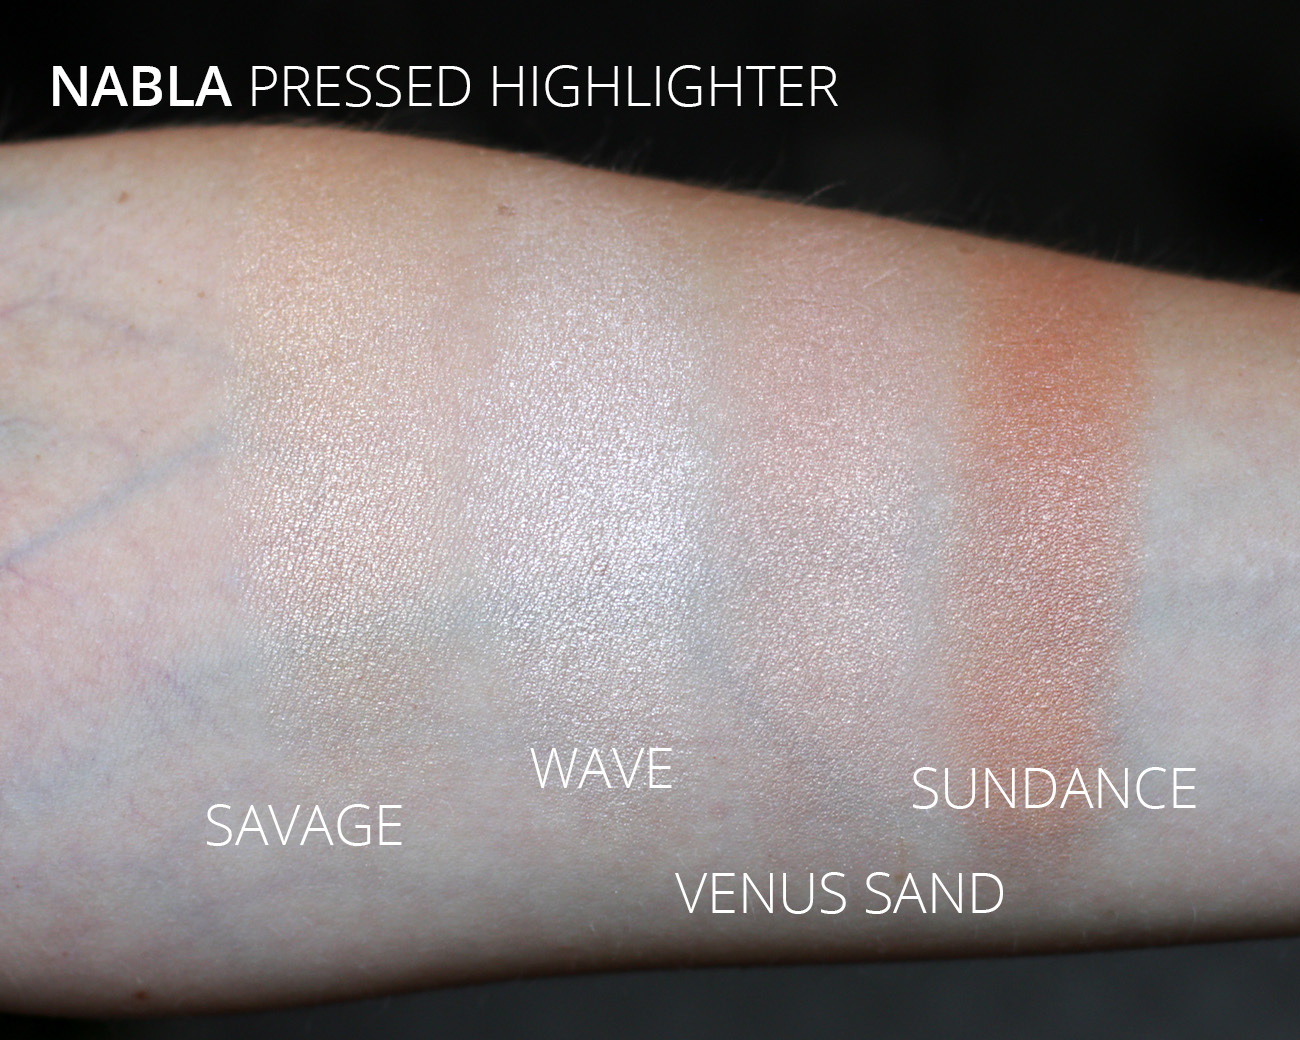 Nabla Pressed Highlighter Wave, Venus Sand, Savage, Sundance Swatches